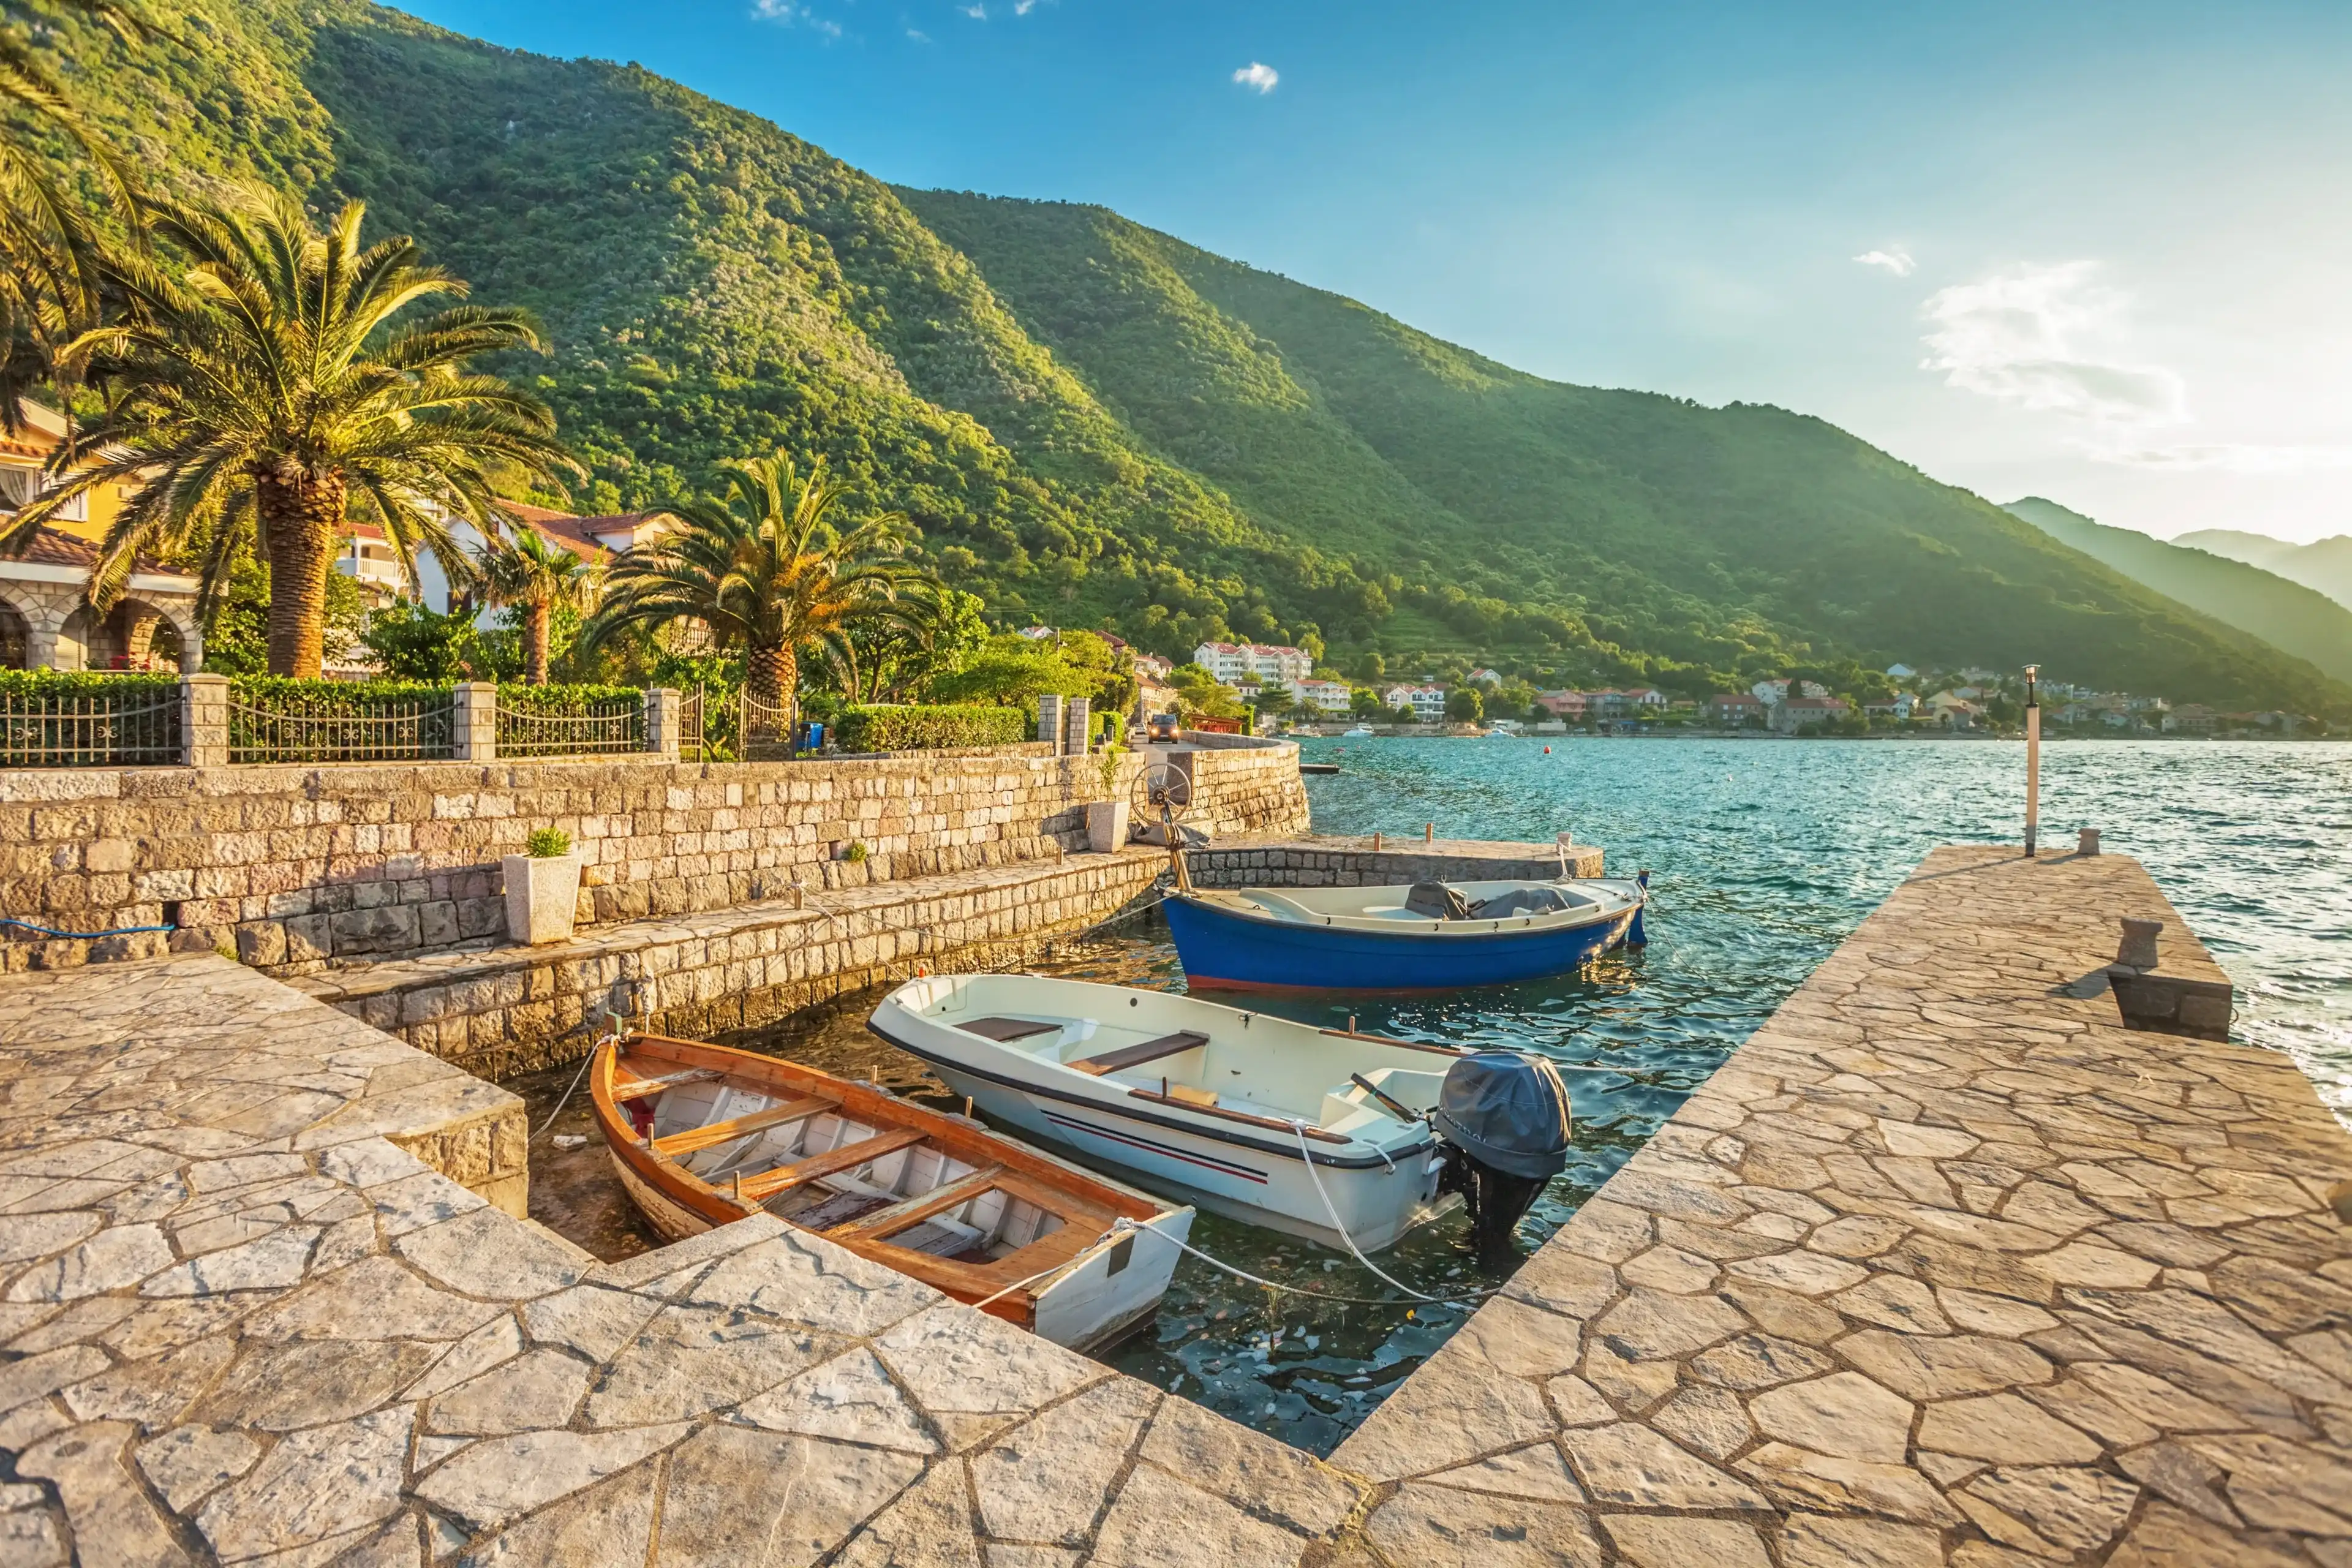 Kotor hotels. Best hotels in Kotor, Montenegro